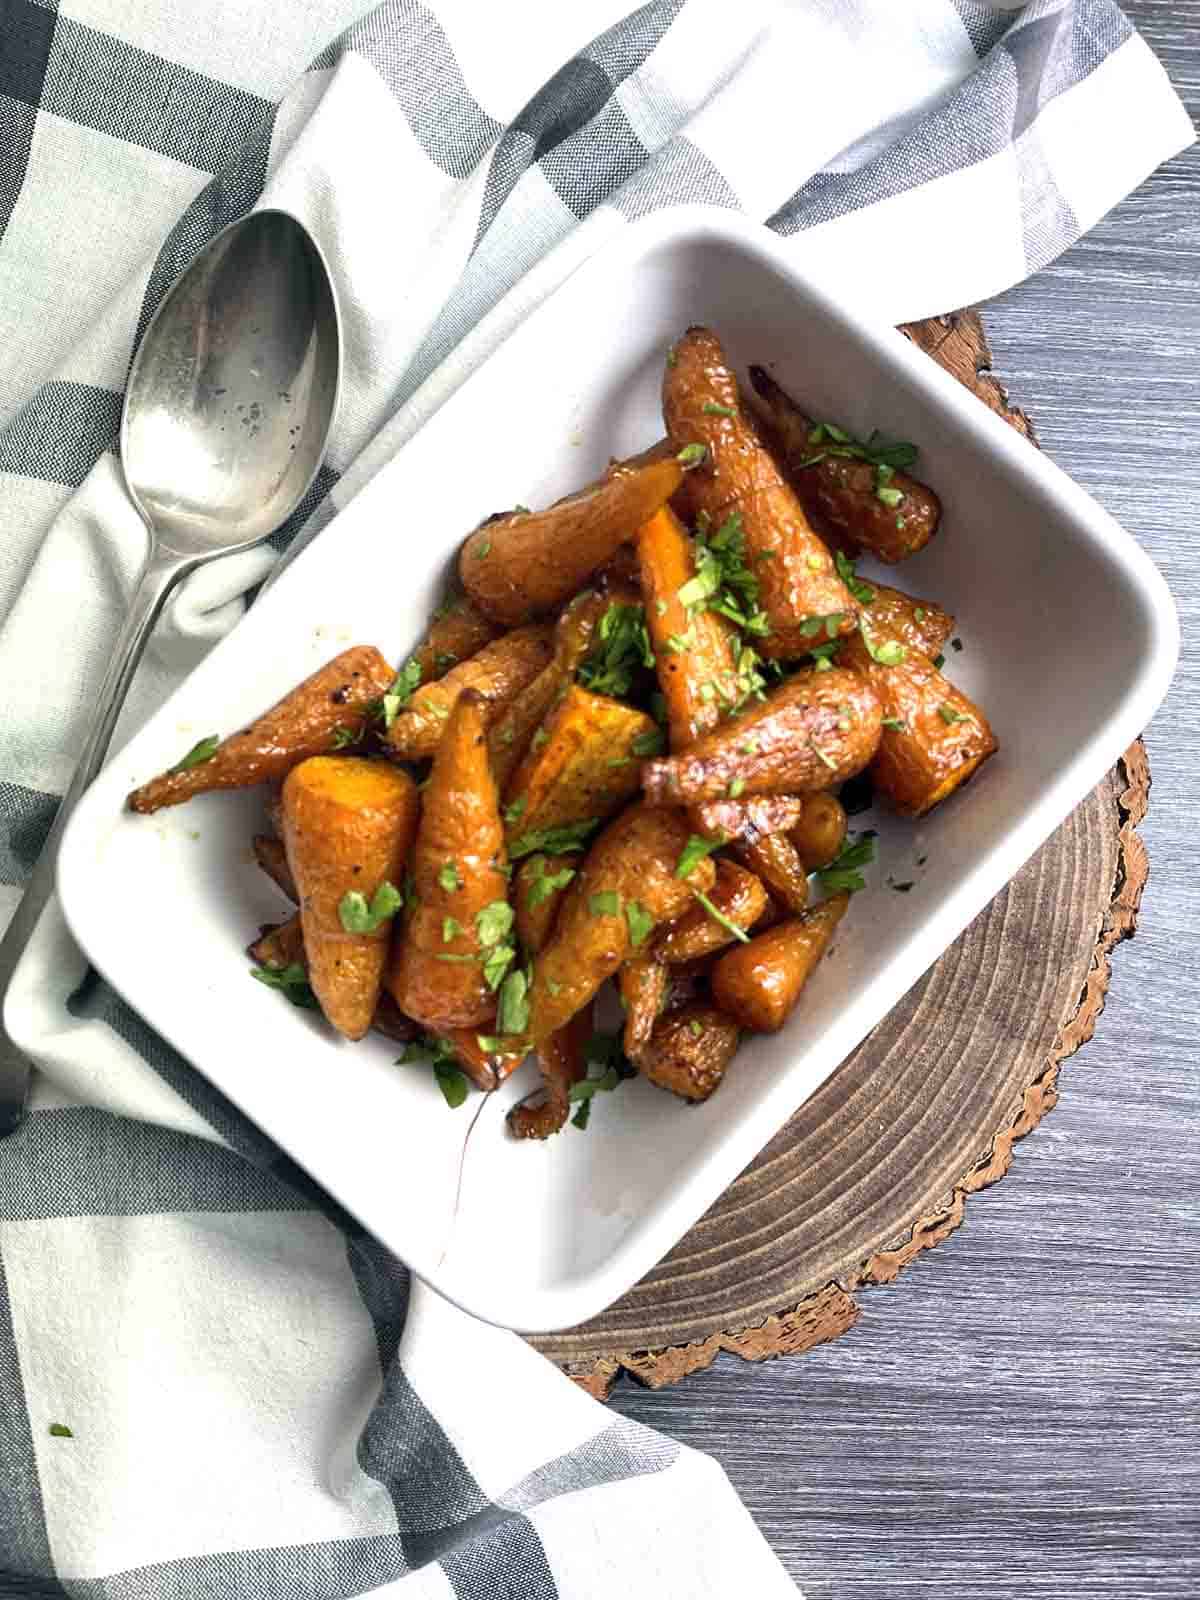 chantenay carrots in a dish.